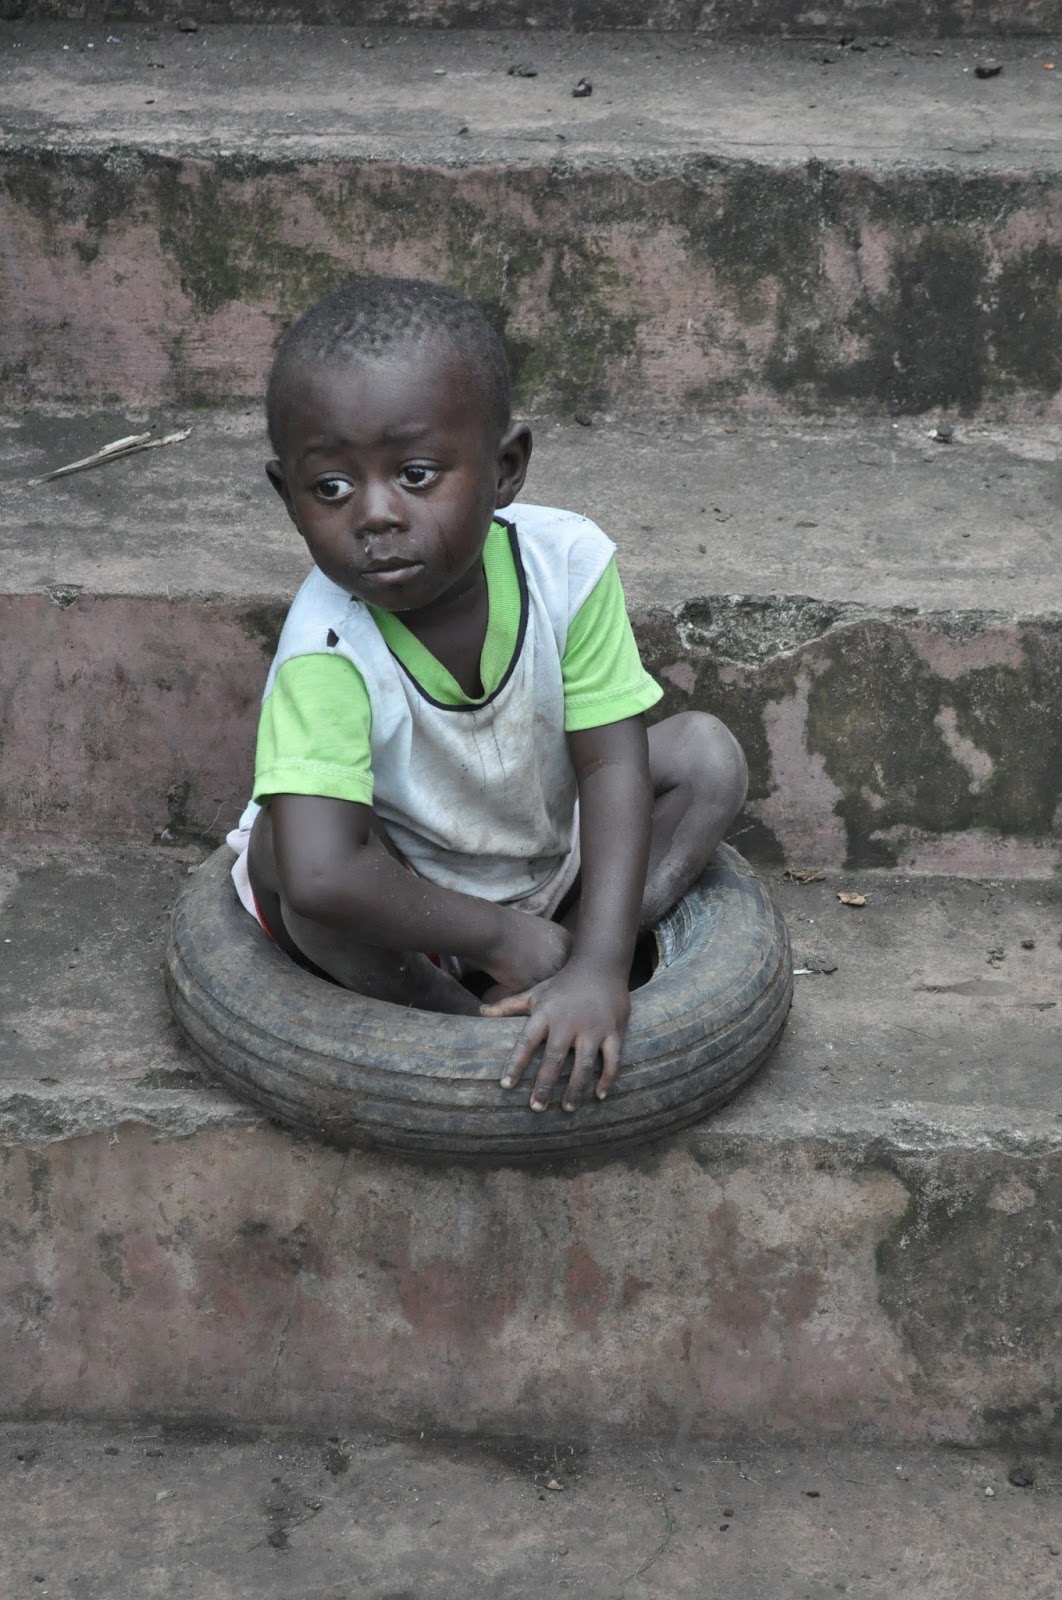 unspoiled Africa: Kids in São Tomé and Príncipe